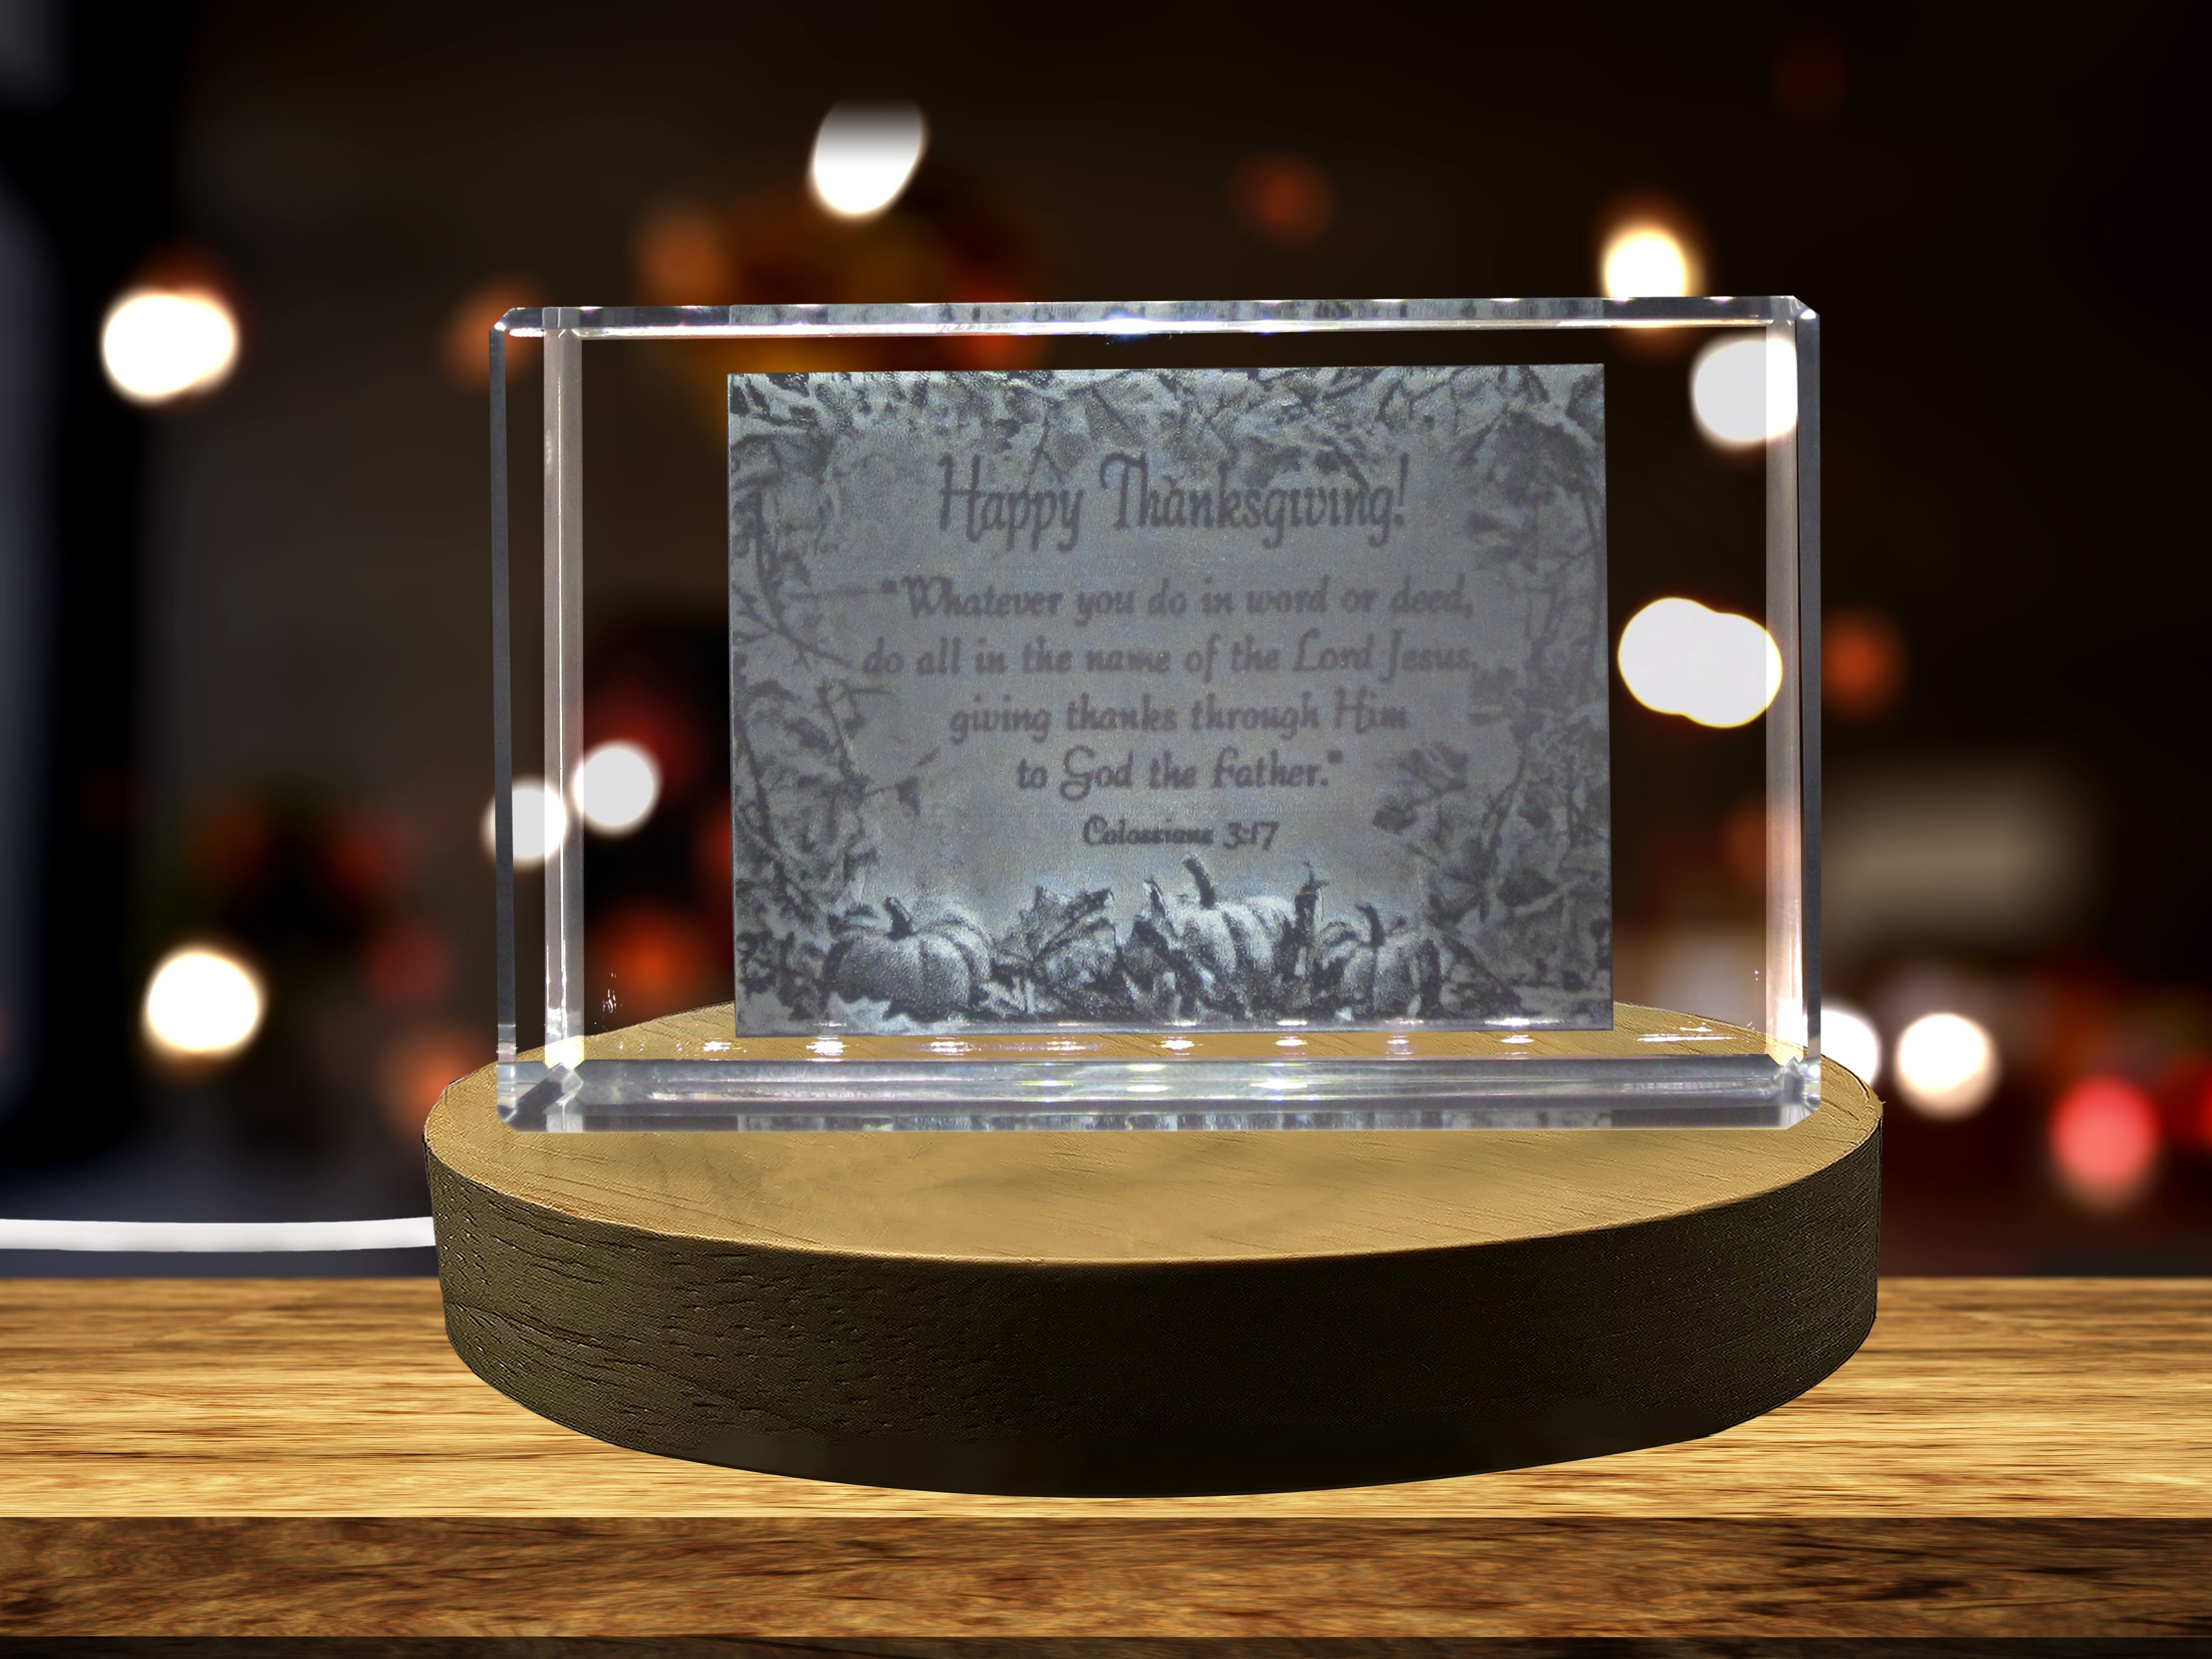 Thanksgiving 5 3D Engraved Crystal 3D Engraved Crystal Keepsake/Gift/Decor/Collectible/Souvenir A&B Crystal Collection